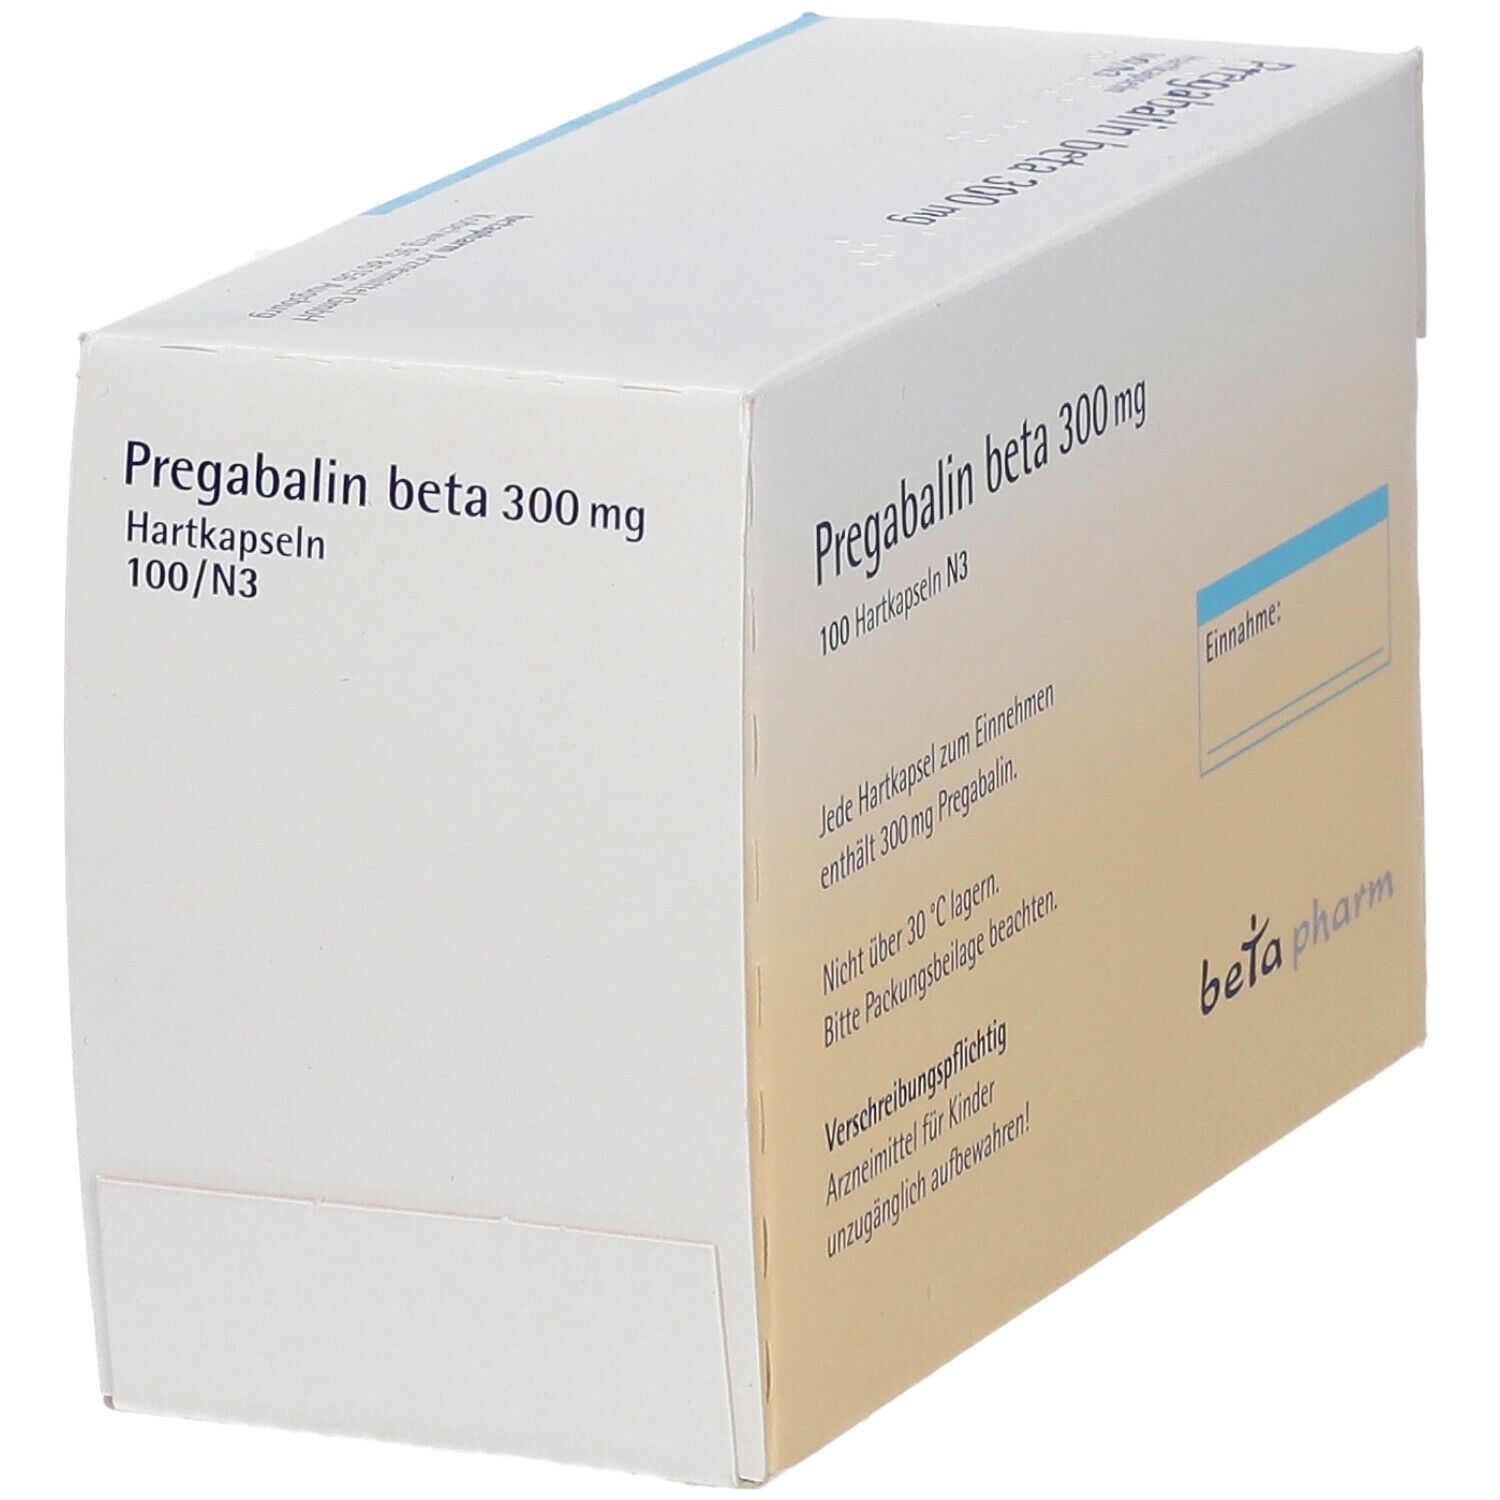 Pregabalin beta 300 mg